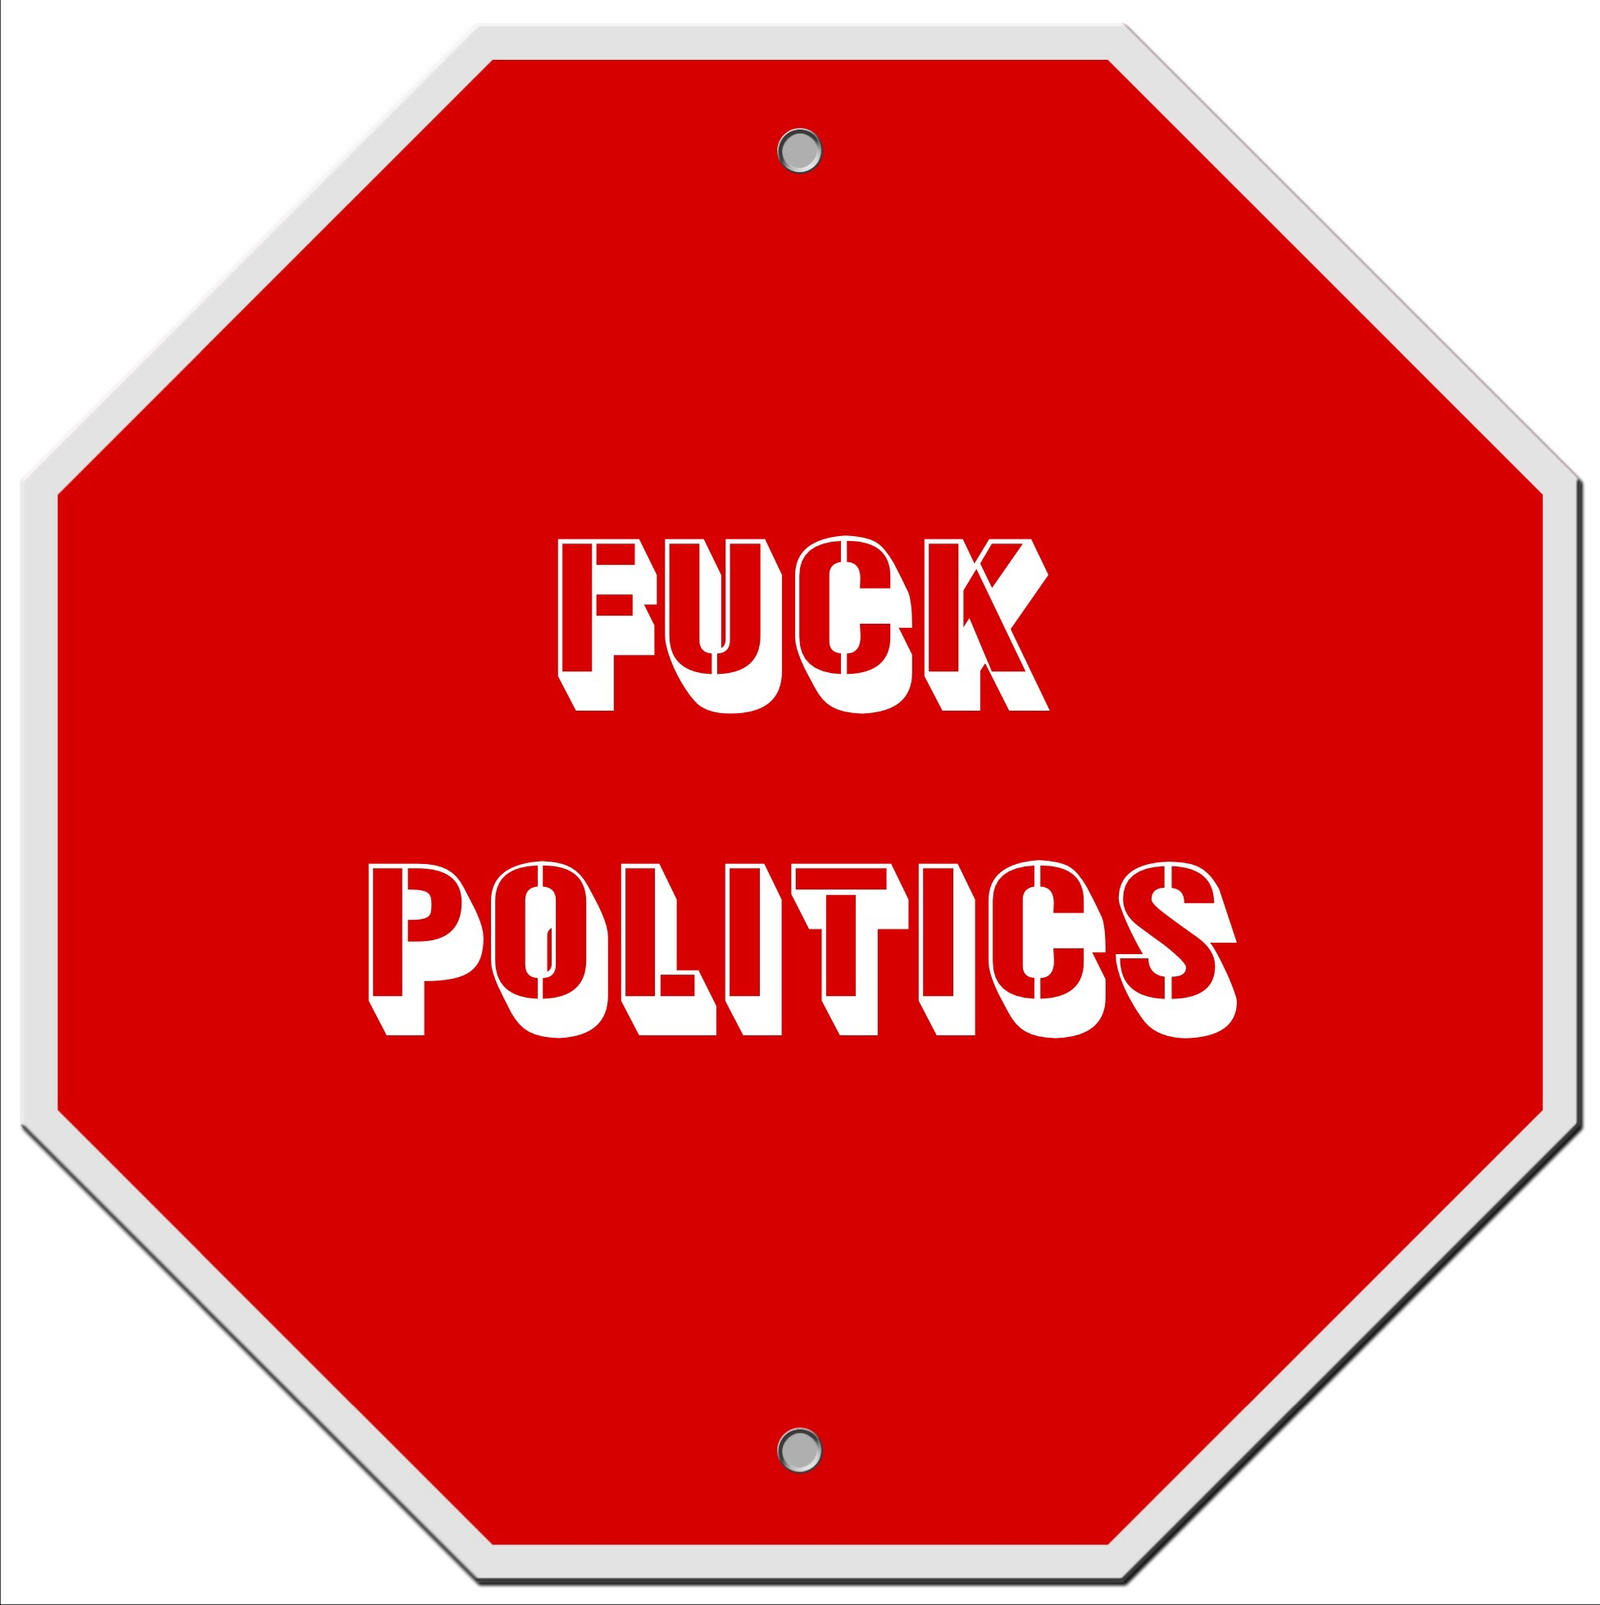 fuck_politics_by_icu8124me-d8kfo60.jpg